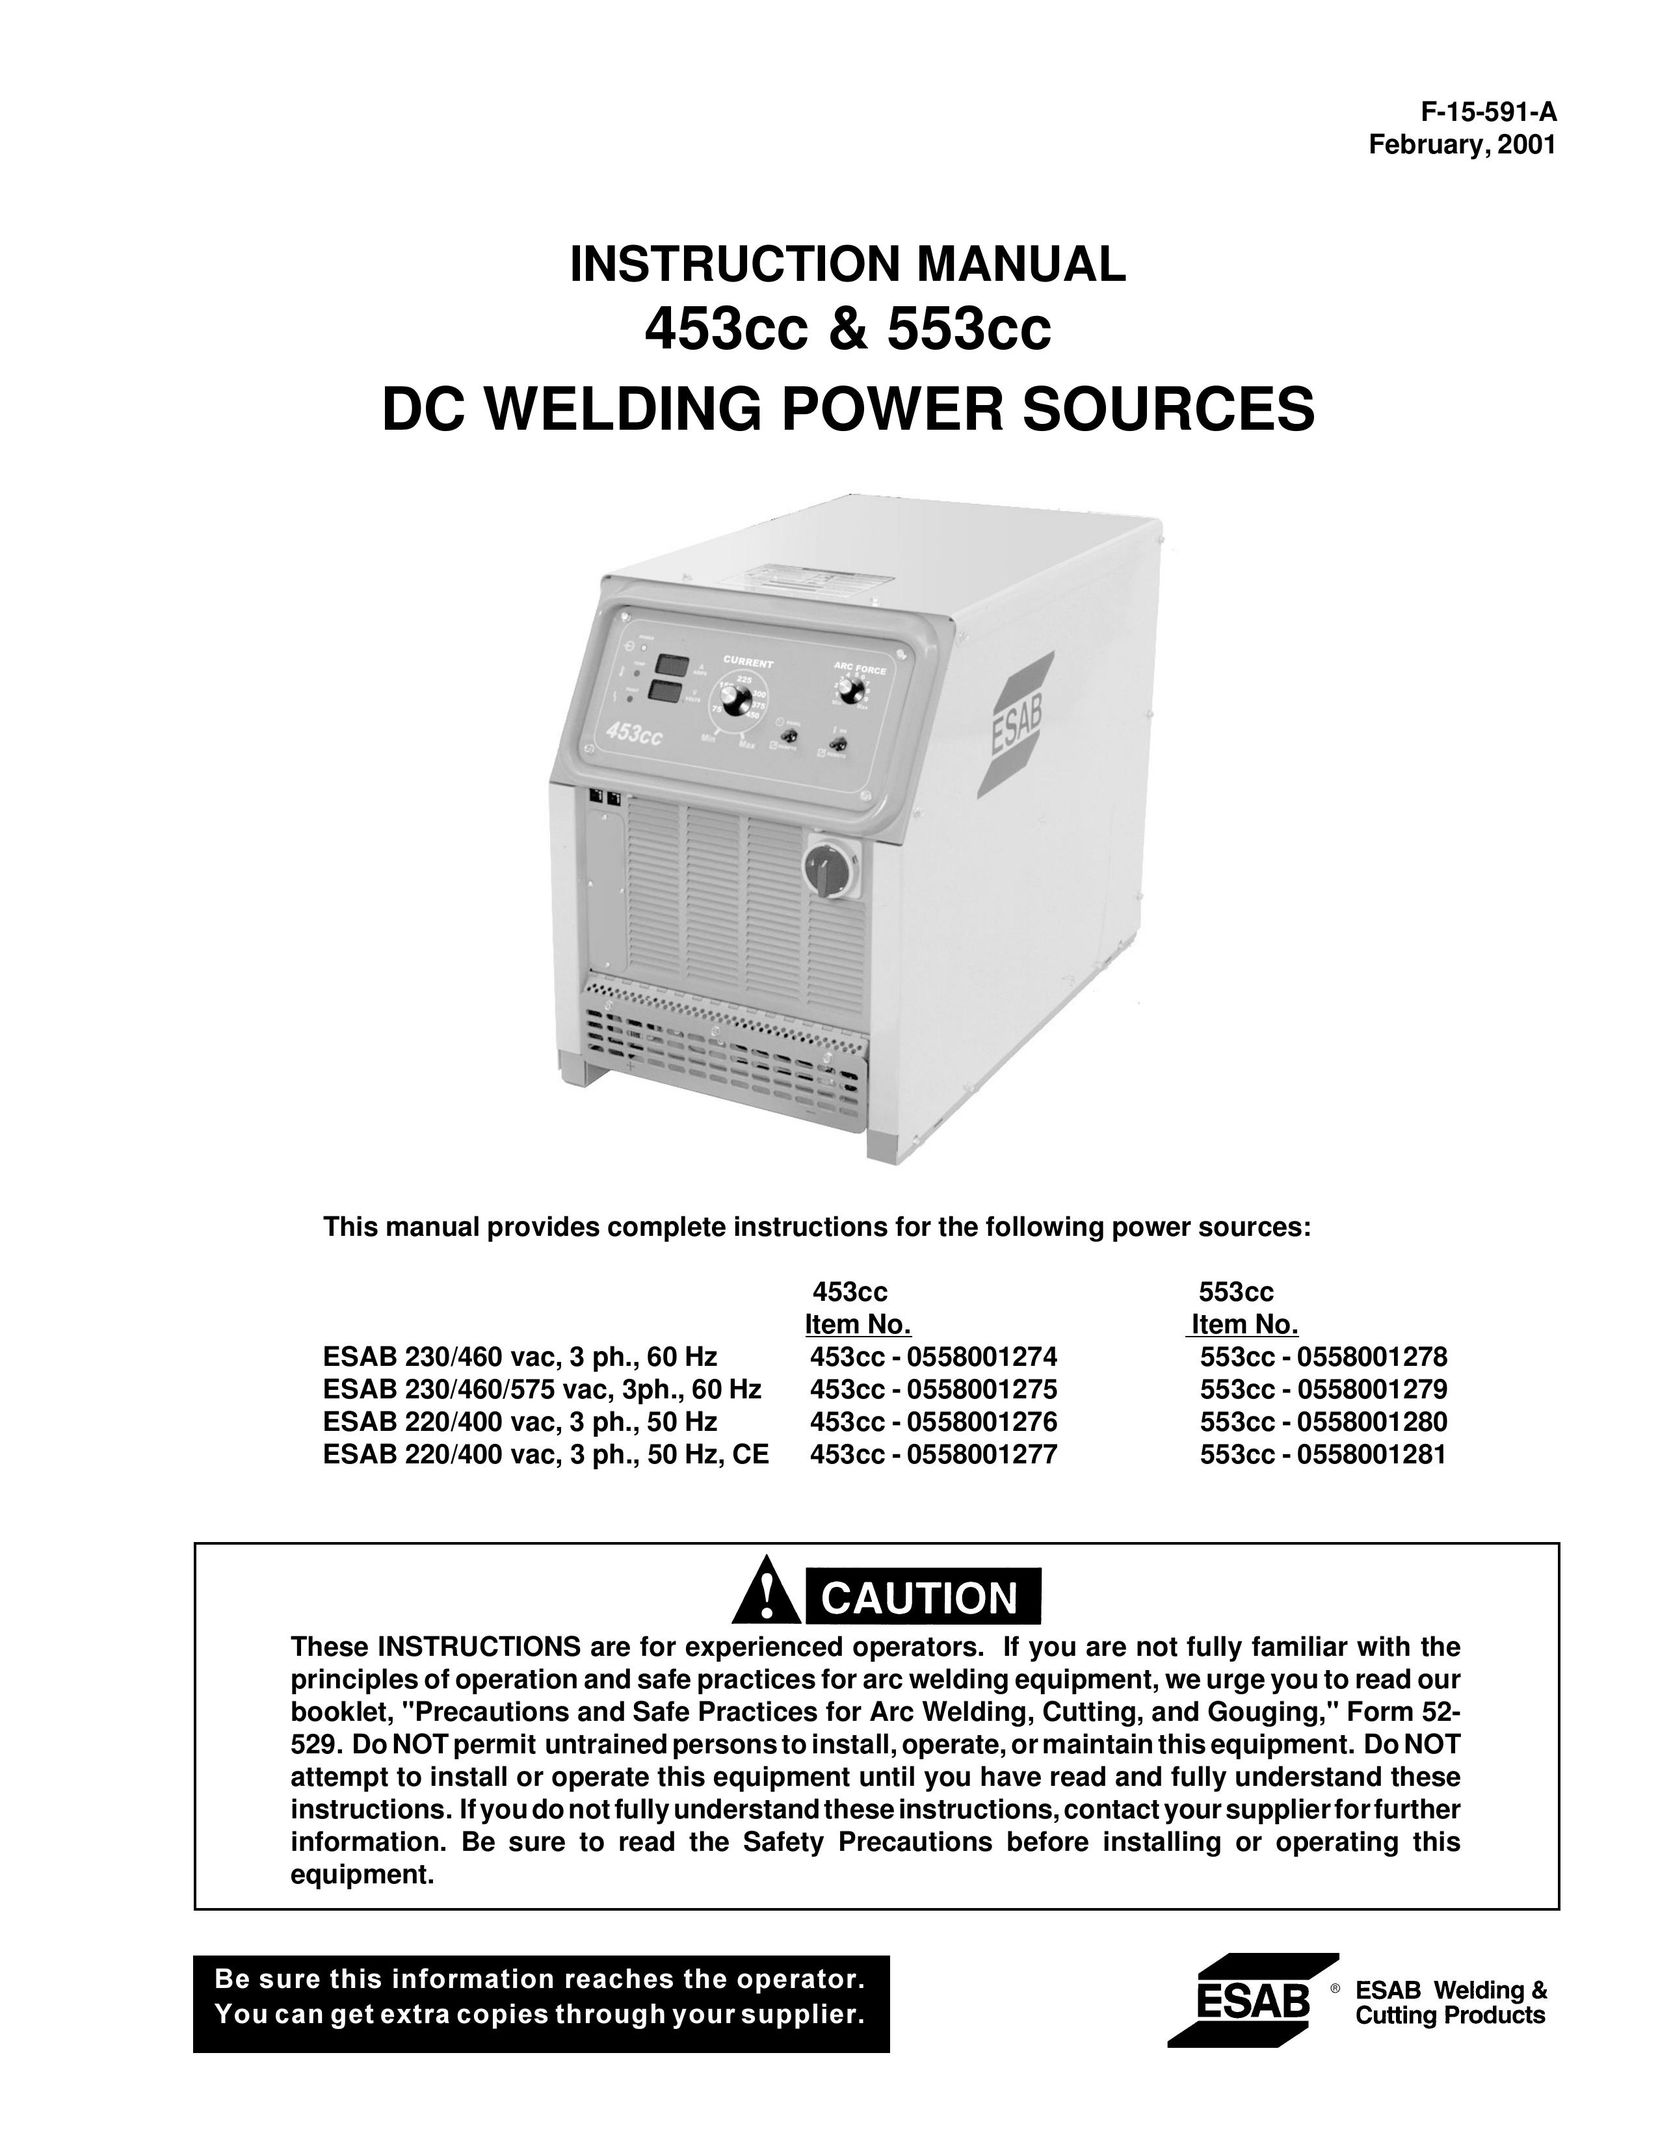 LG Electronics 453cc Welding System User Manual